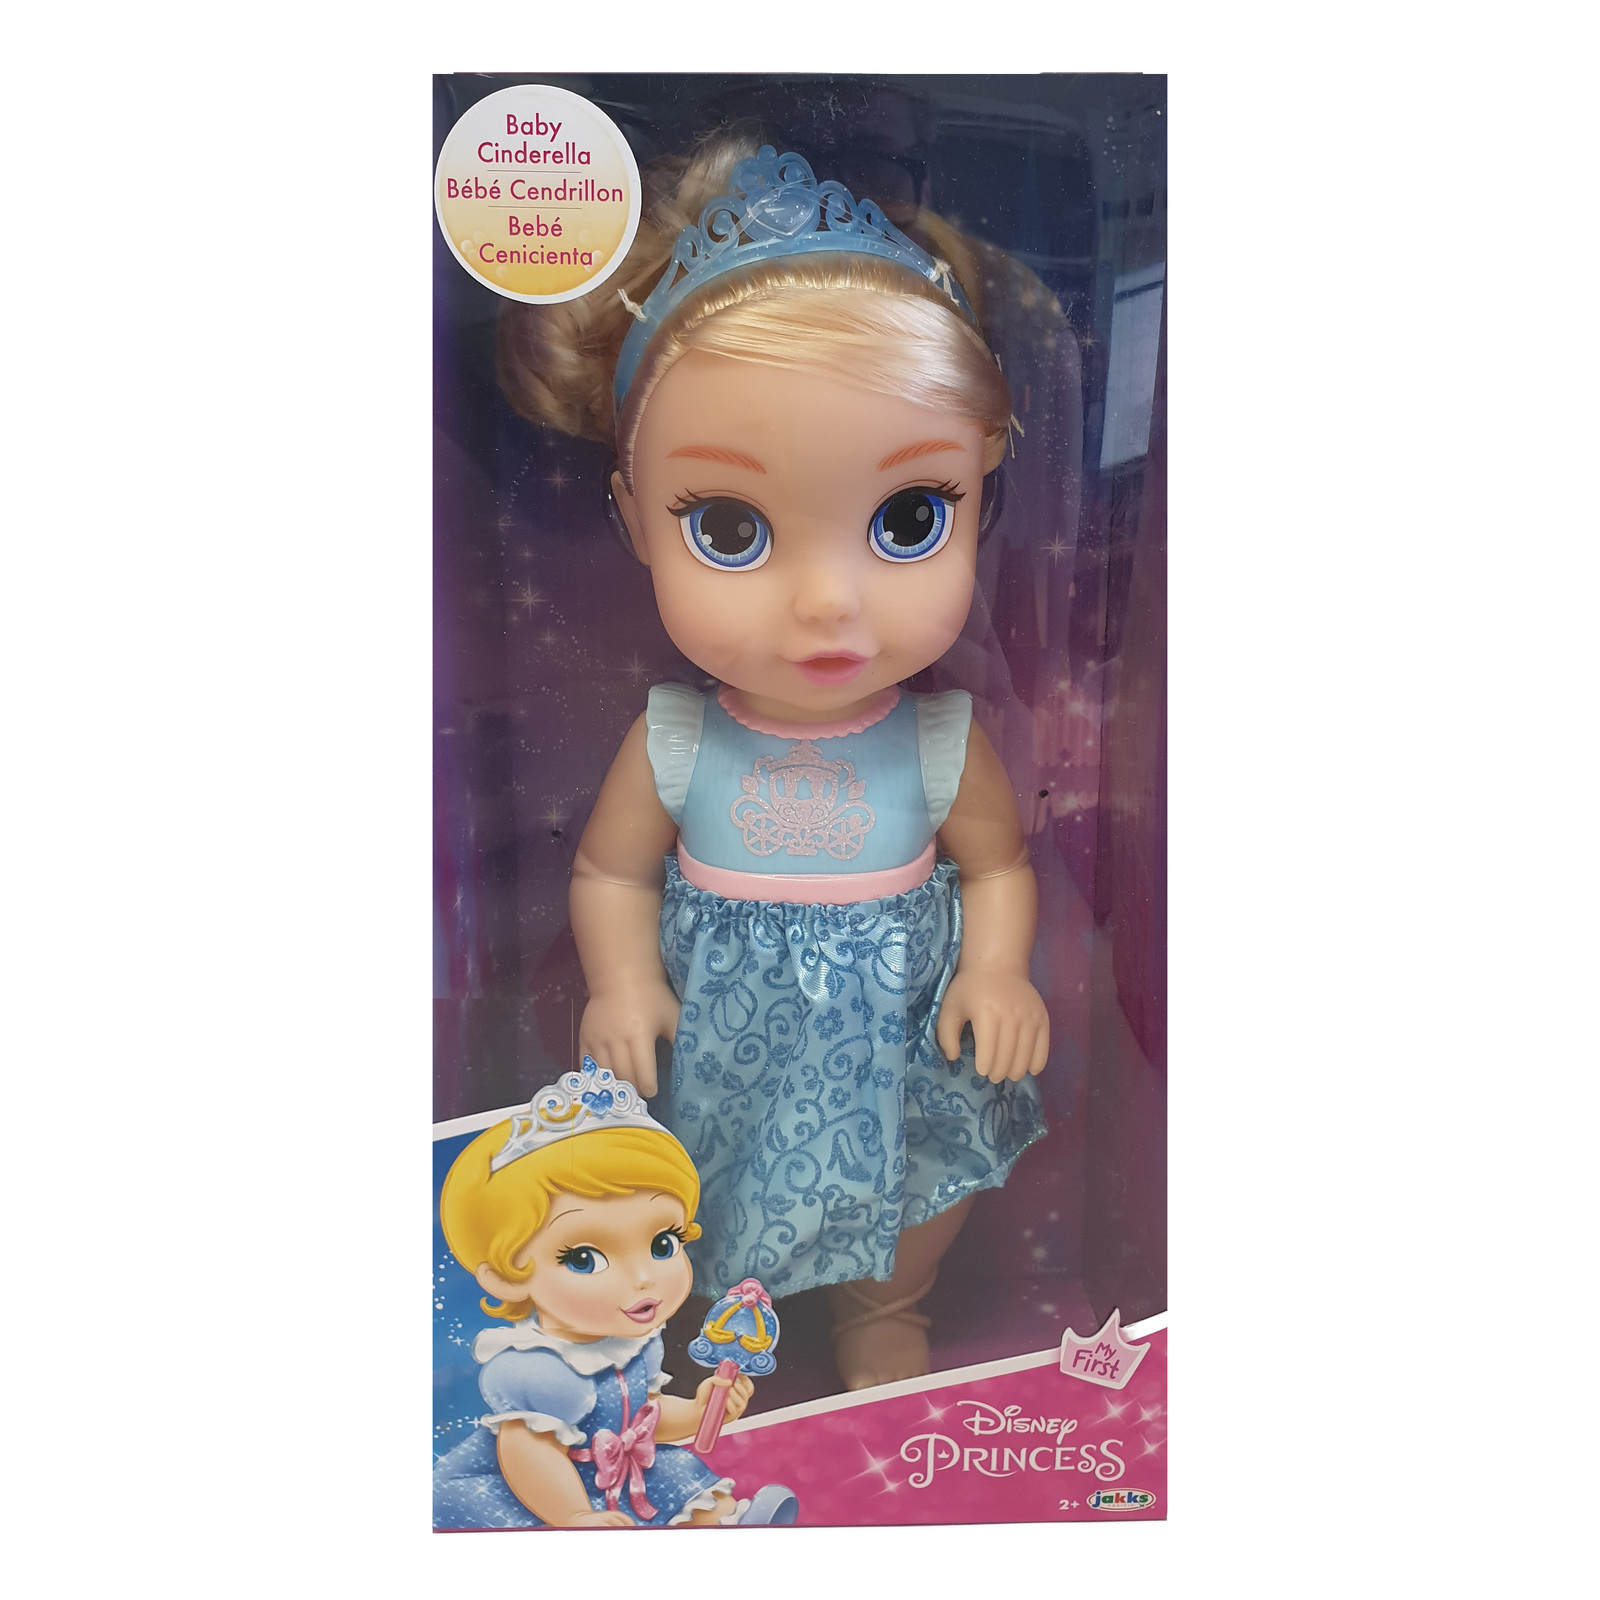 My First Disney Princess Doll Baby Cinderella